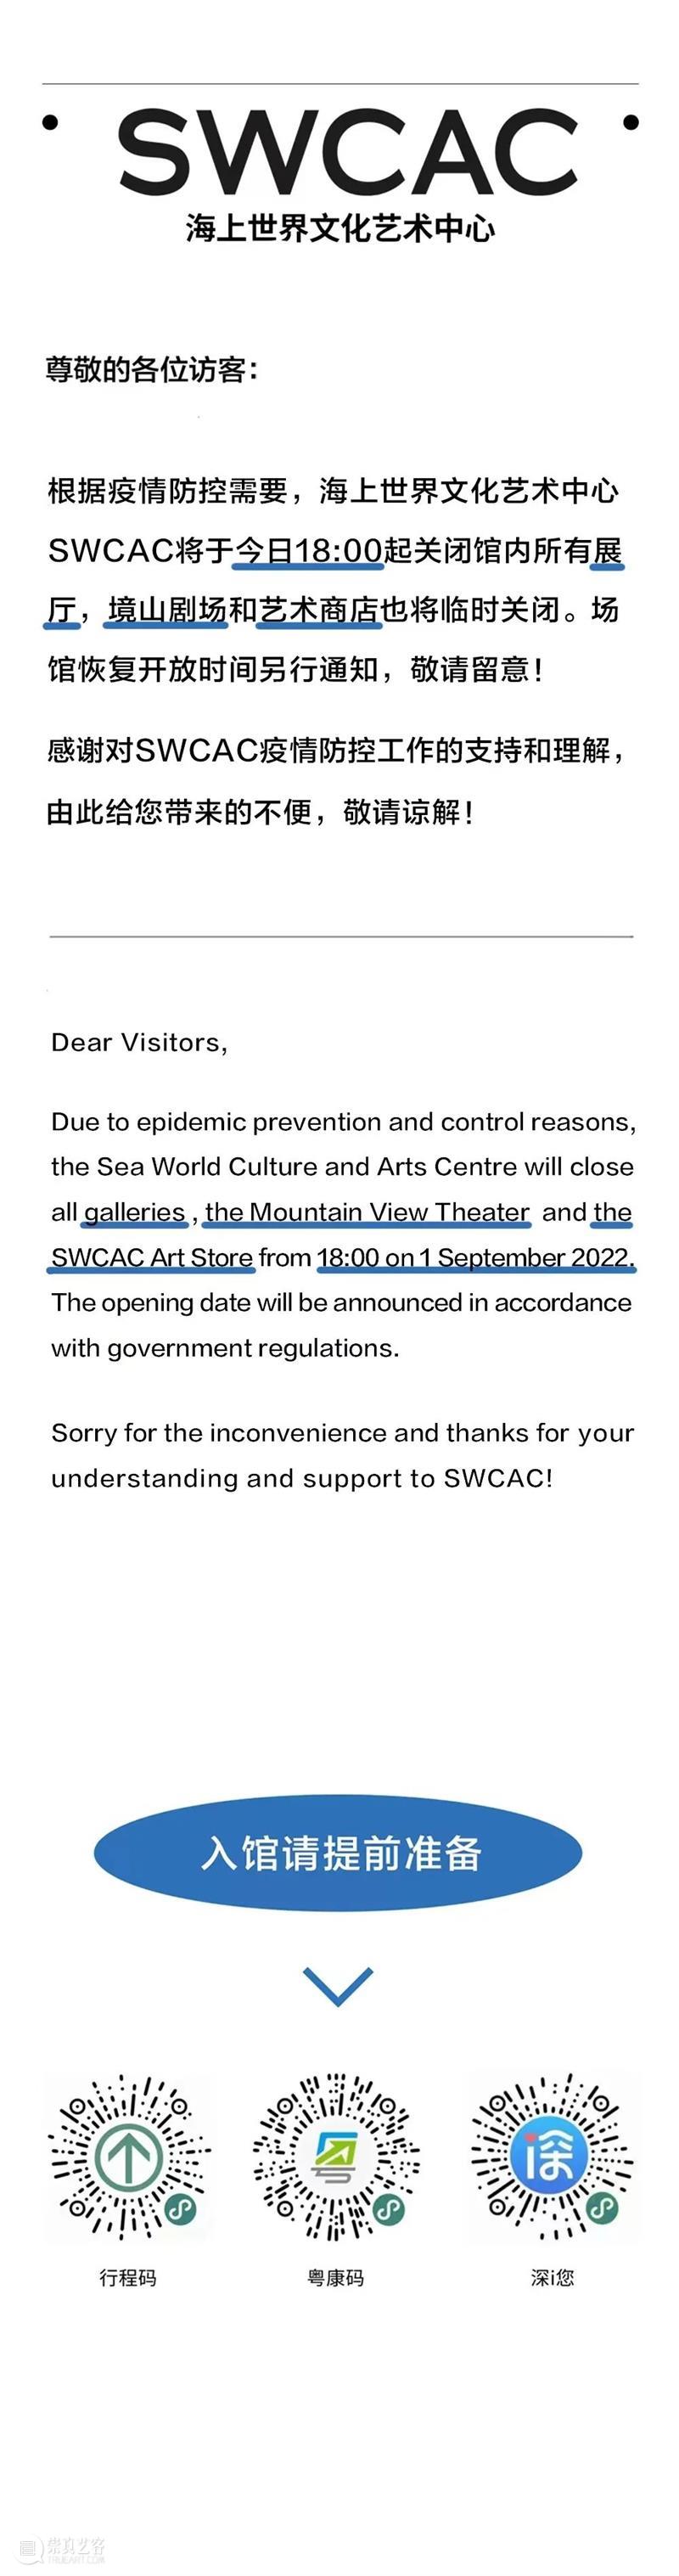 SWCAC临时关闭通知 崇真艺客